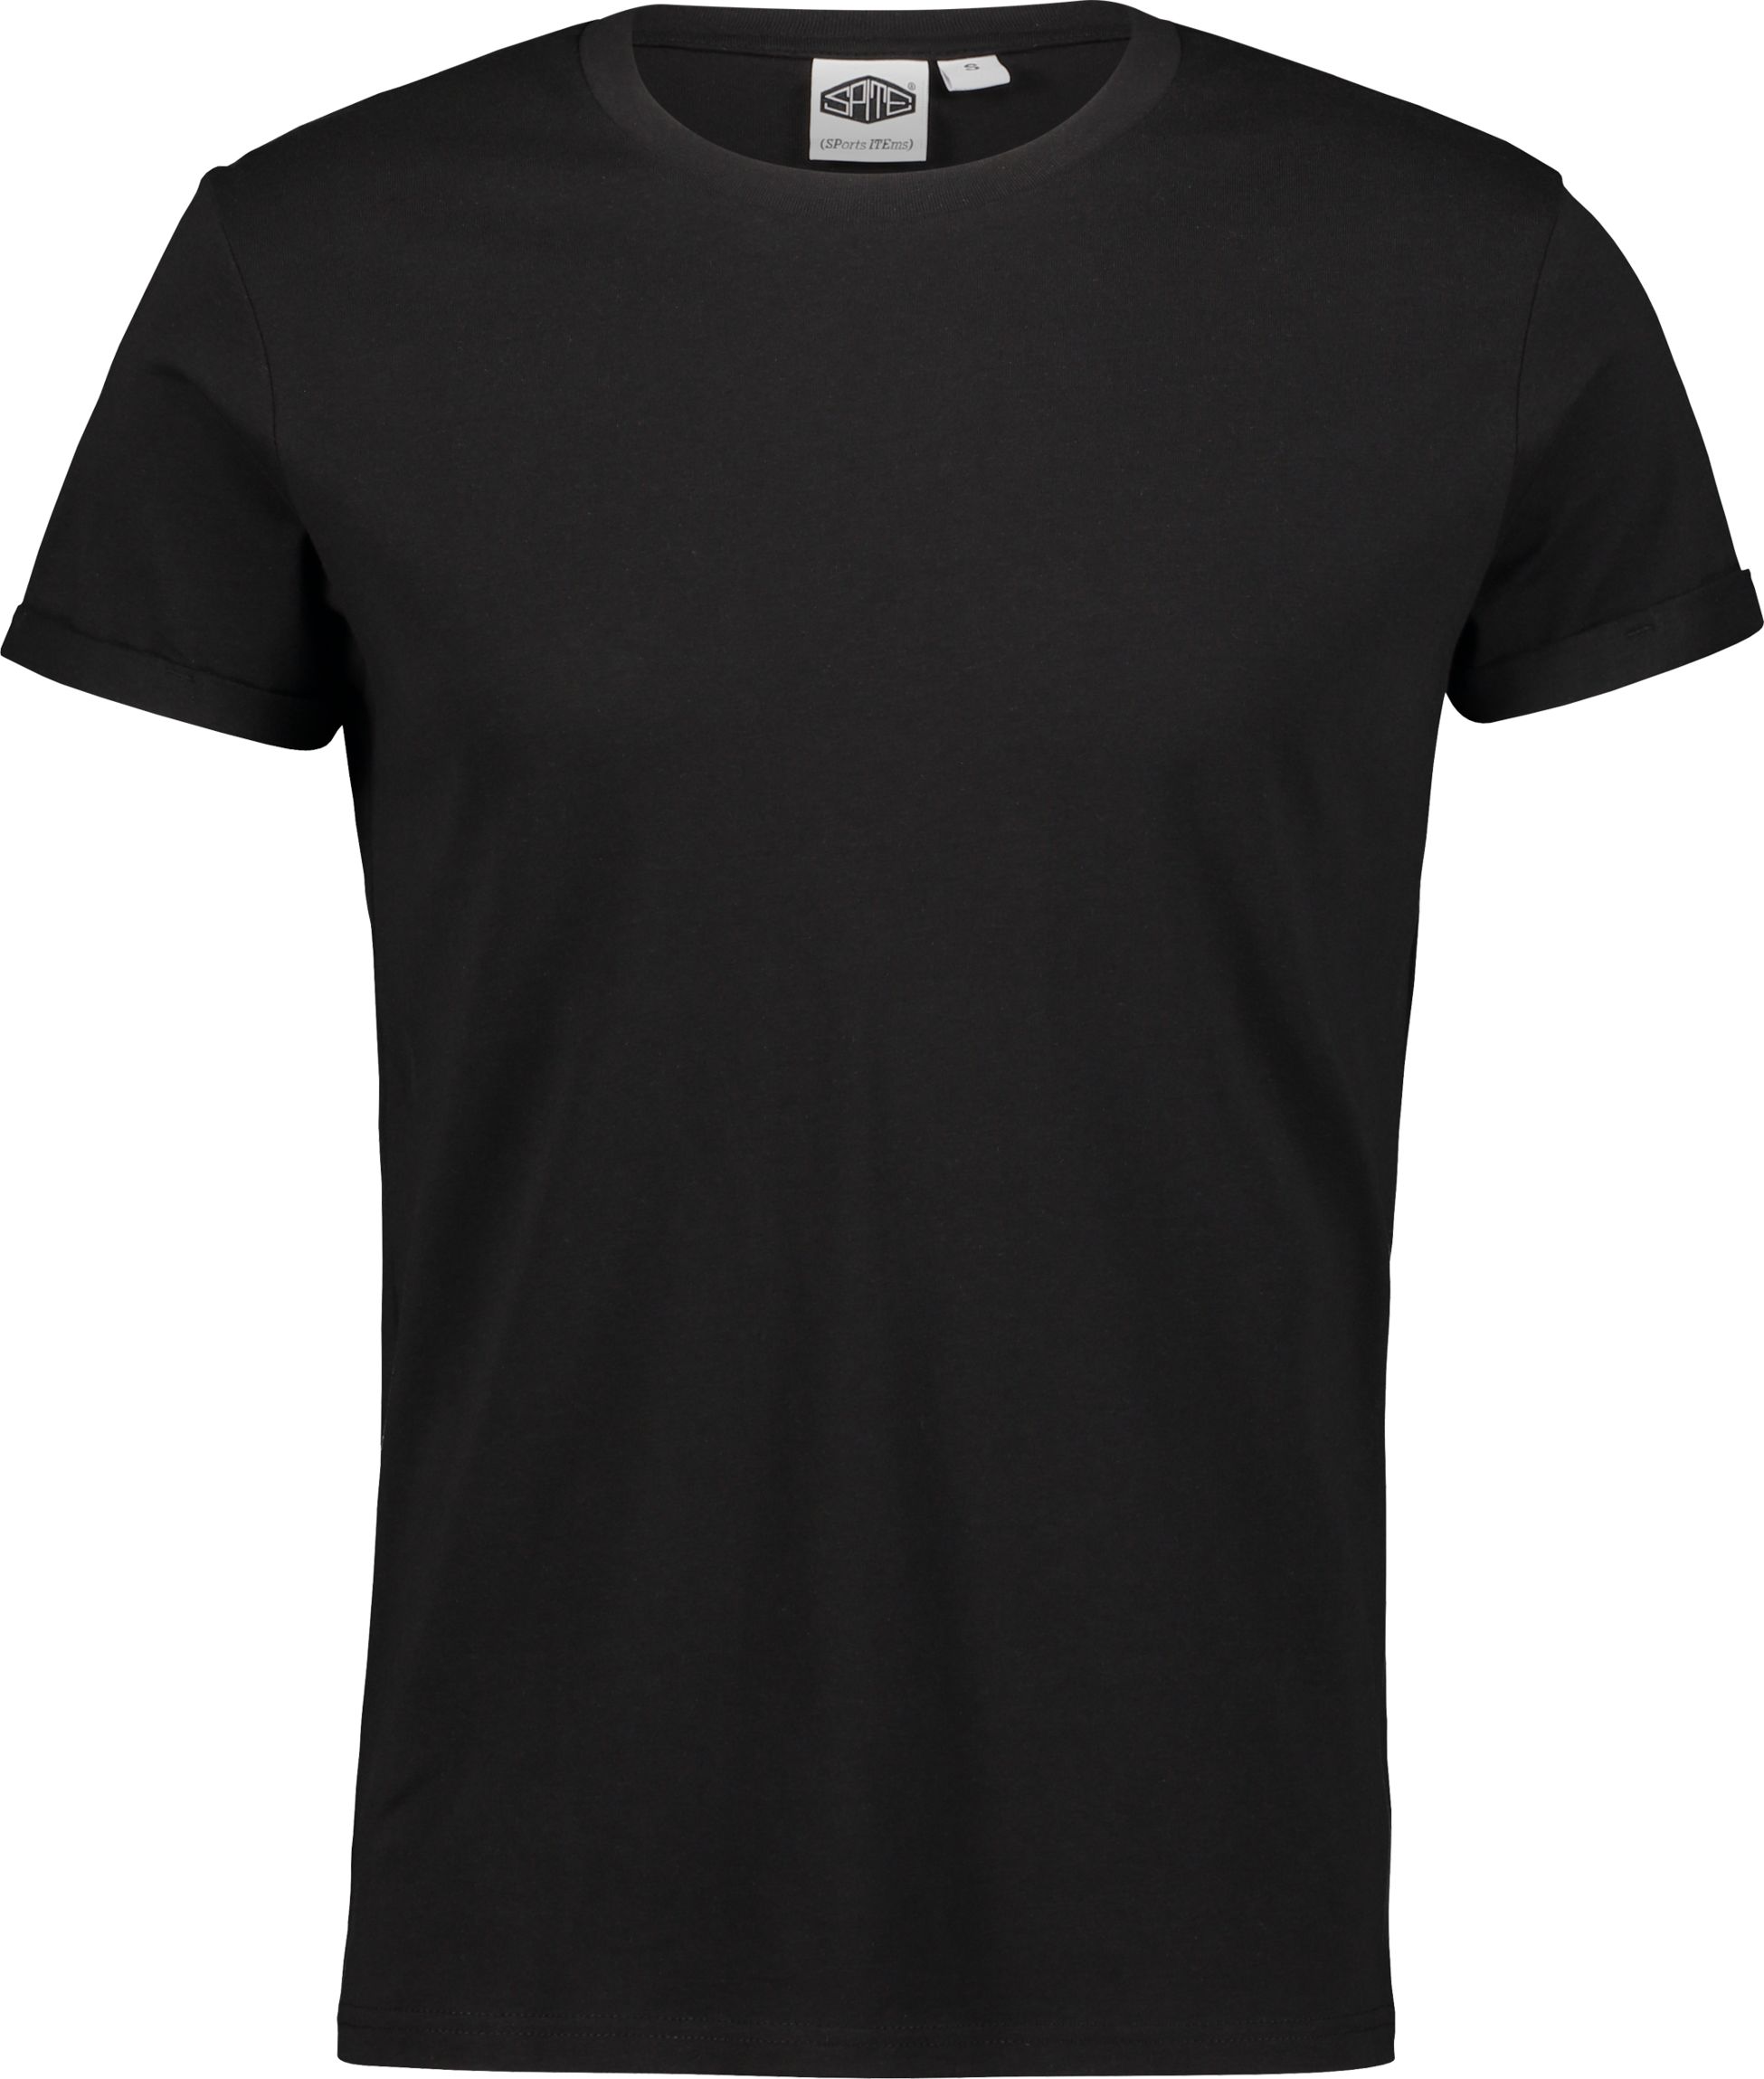 T-shirt de sport - black/white